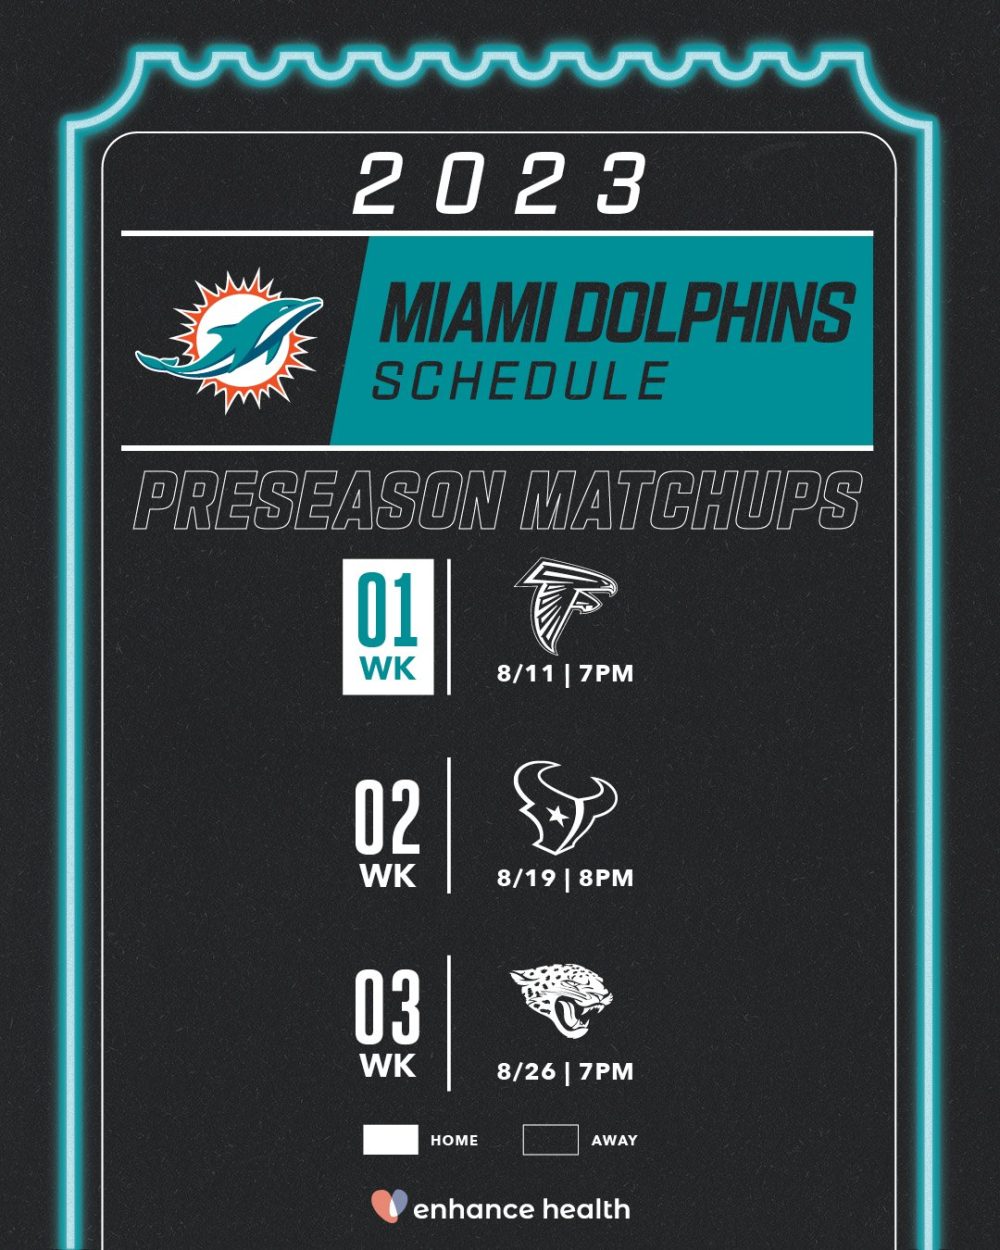 Miami Dolphins preseason schedule